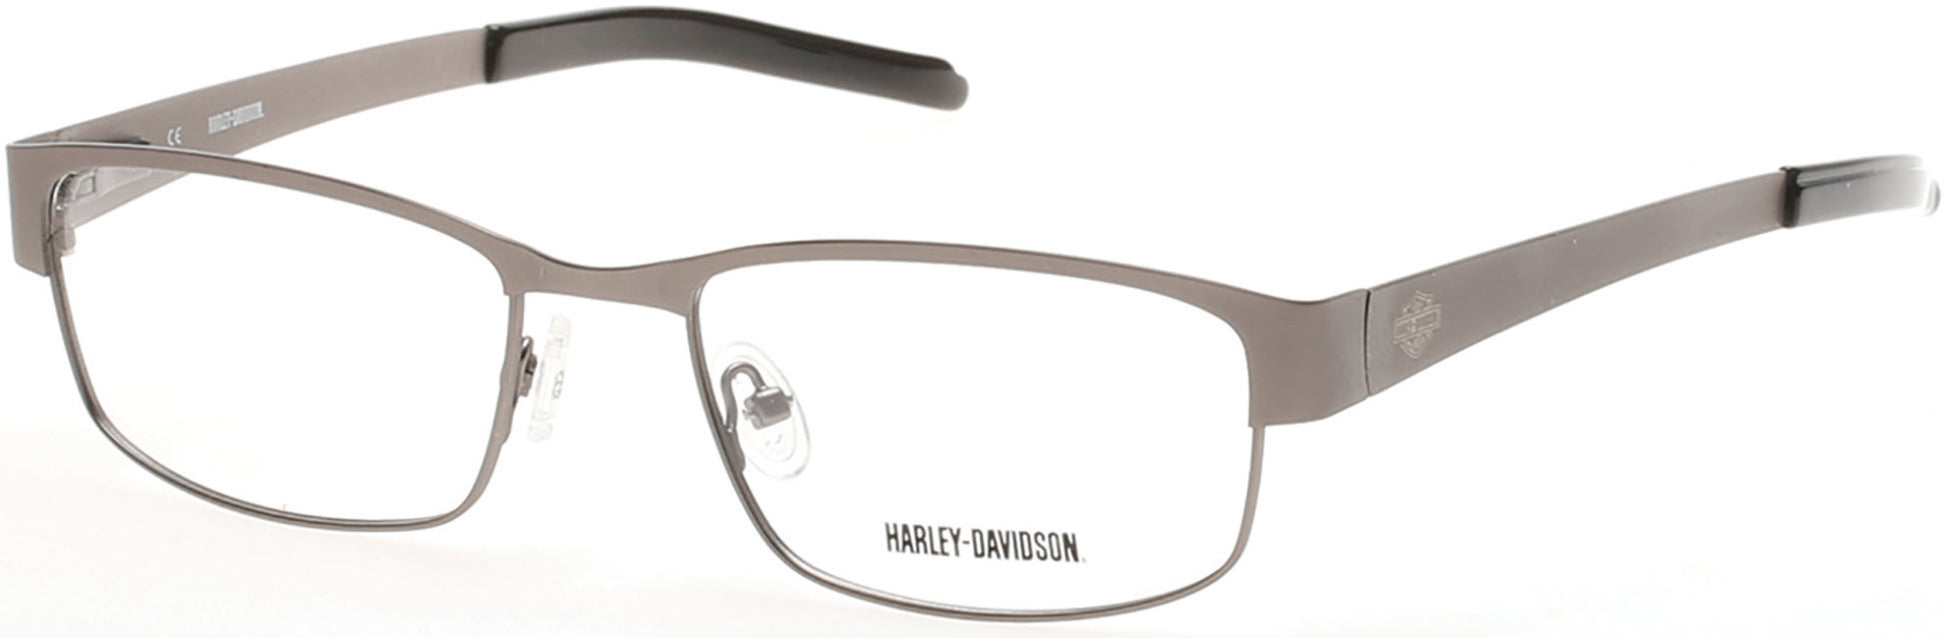 Harley-Davidson HD0721 Eyeglasses J14-J14 - Metal